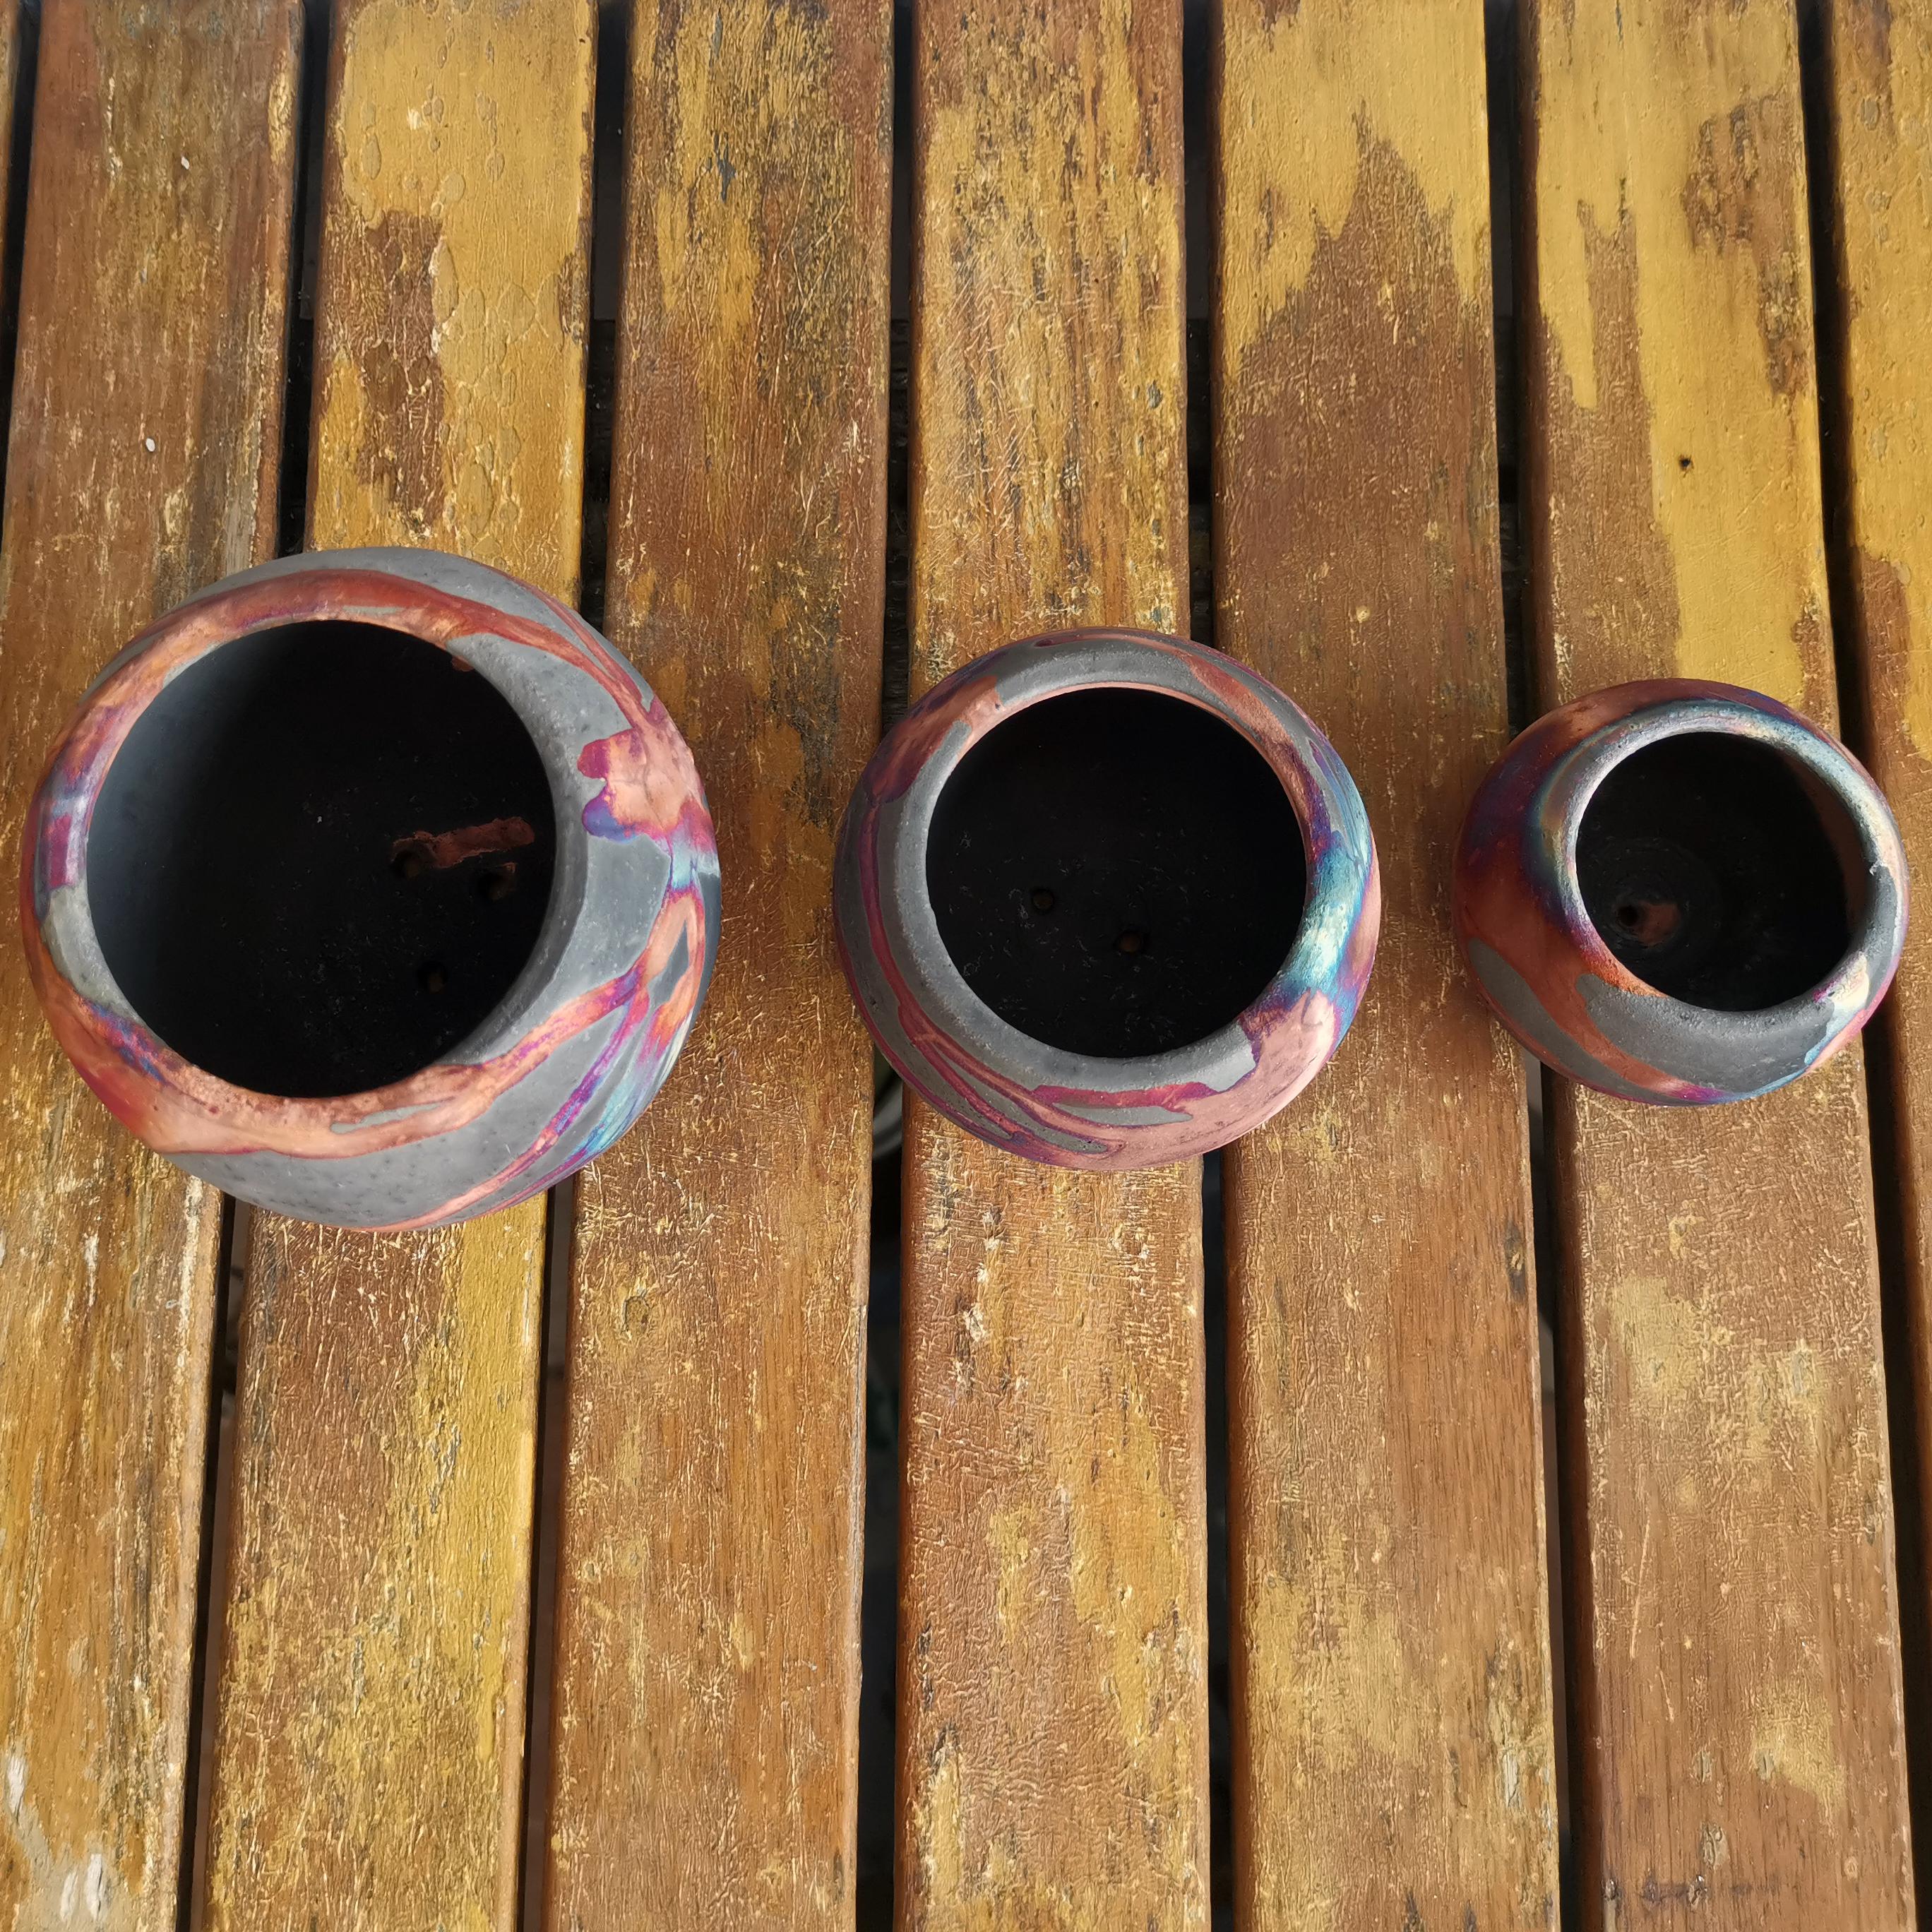 Tsuchi Raku Mini Planter Pot Set of 3 - Carbon Copper - Handmade Ceramic In New Condition For Sale In Petaling Jaya, MY